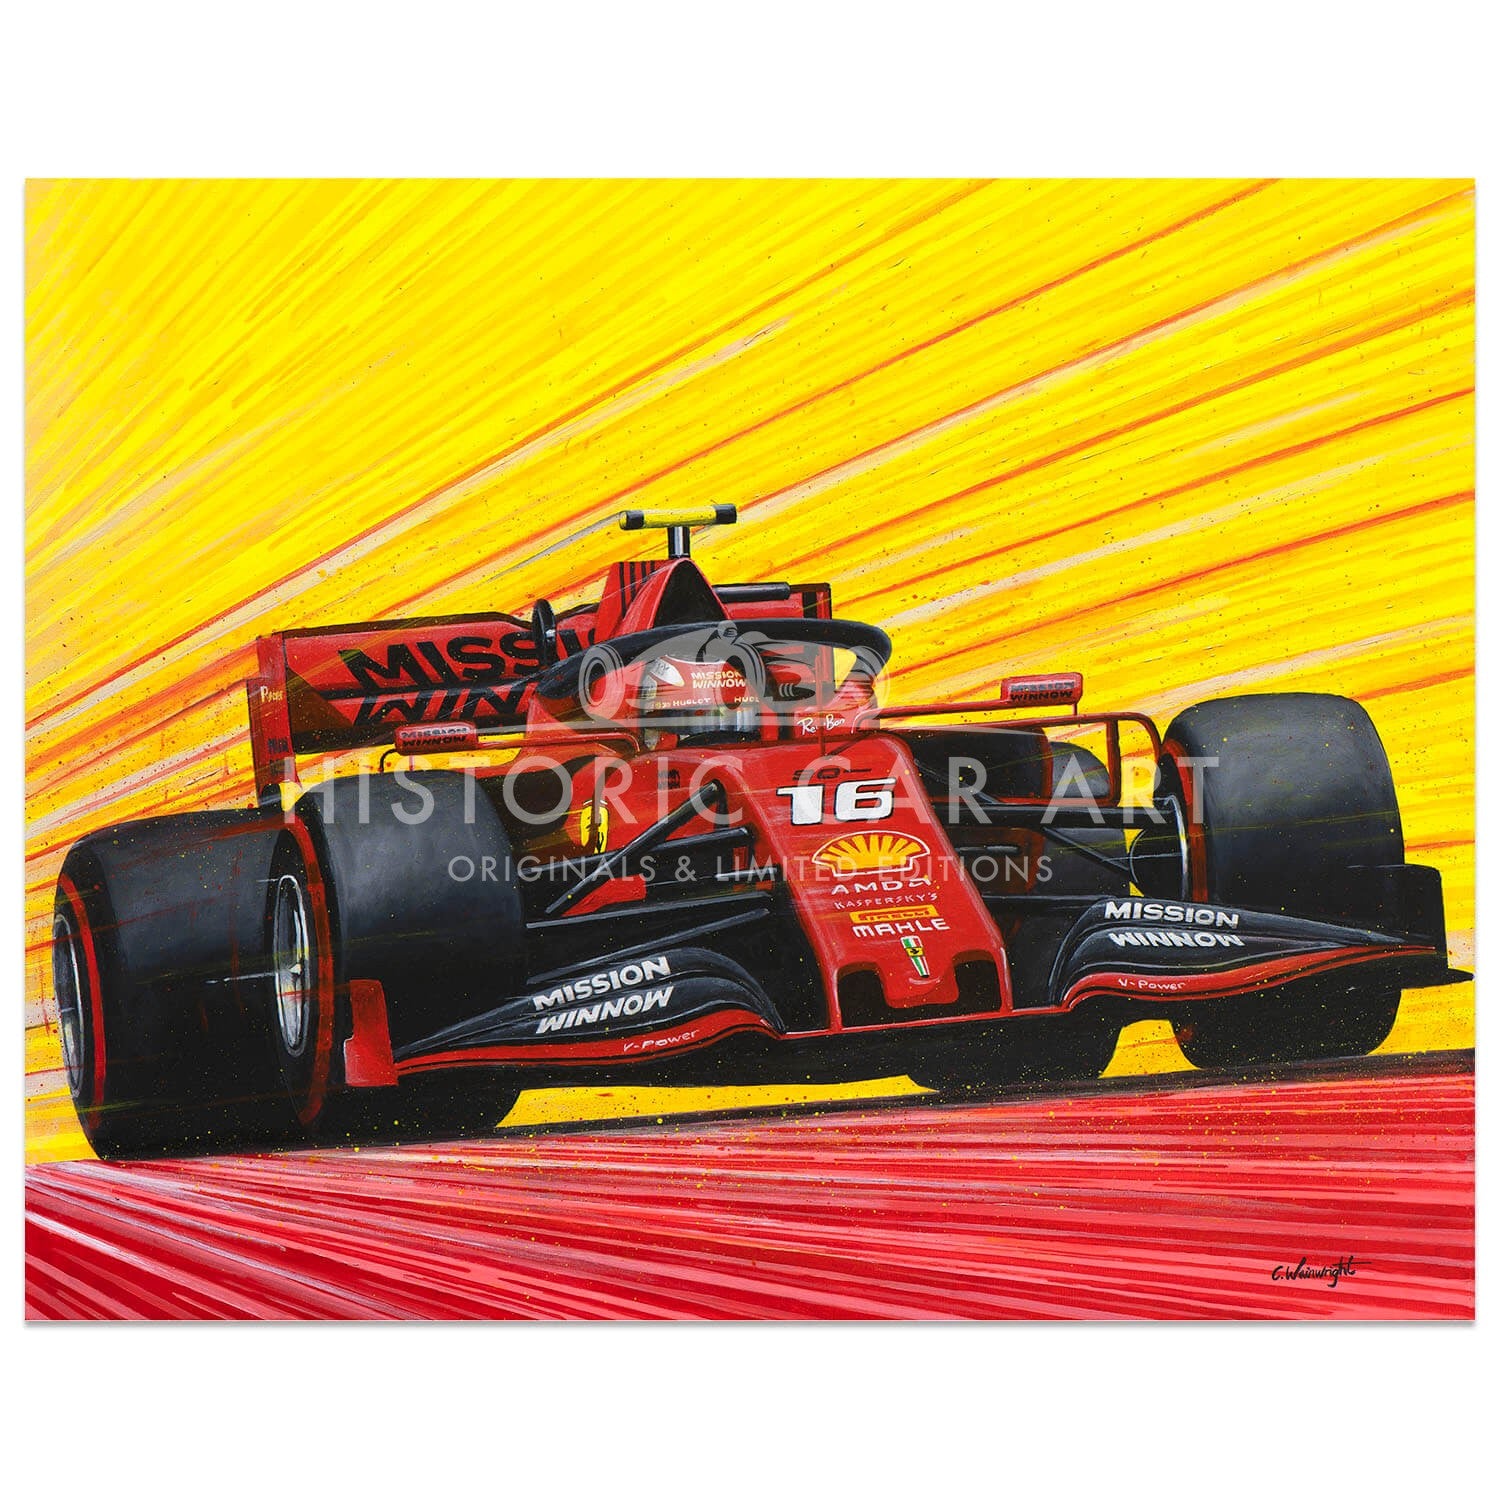 Forza Charles | Ferrari SF90 | Charles Leclerc | 2019 | Artwork